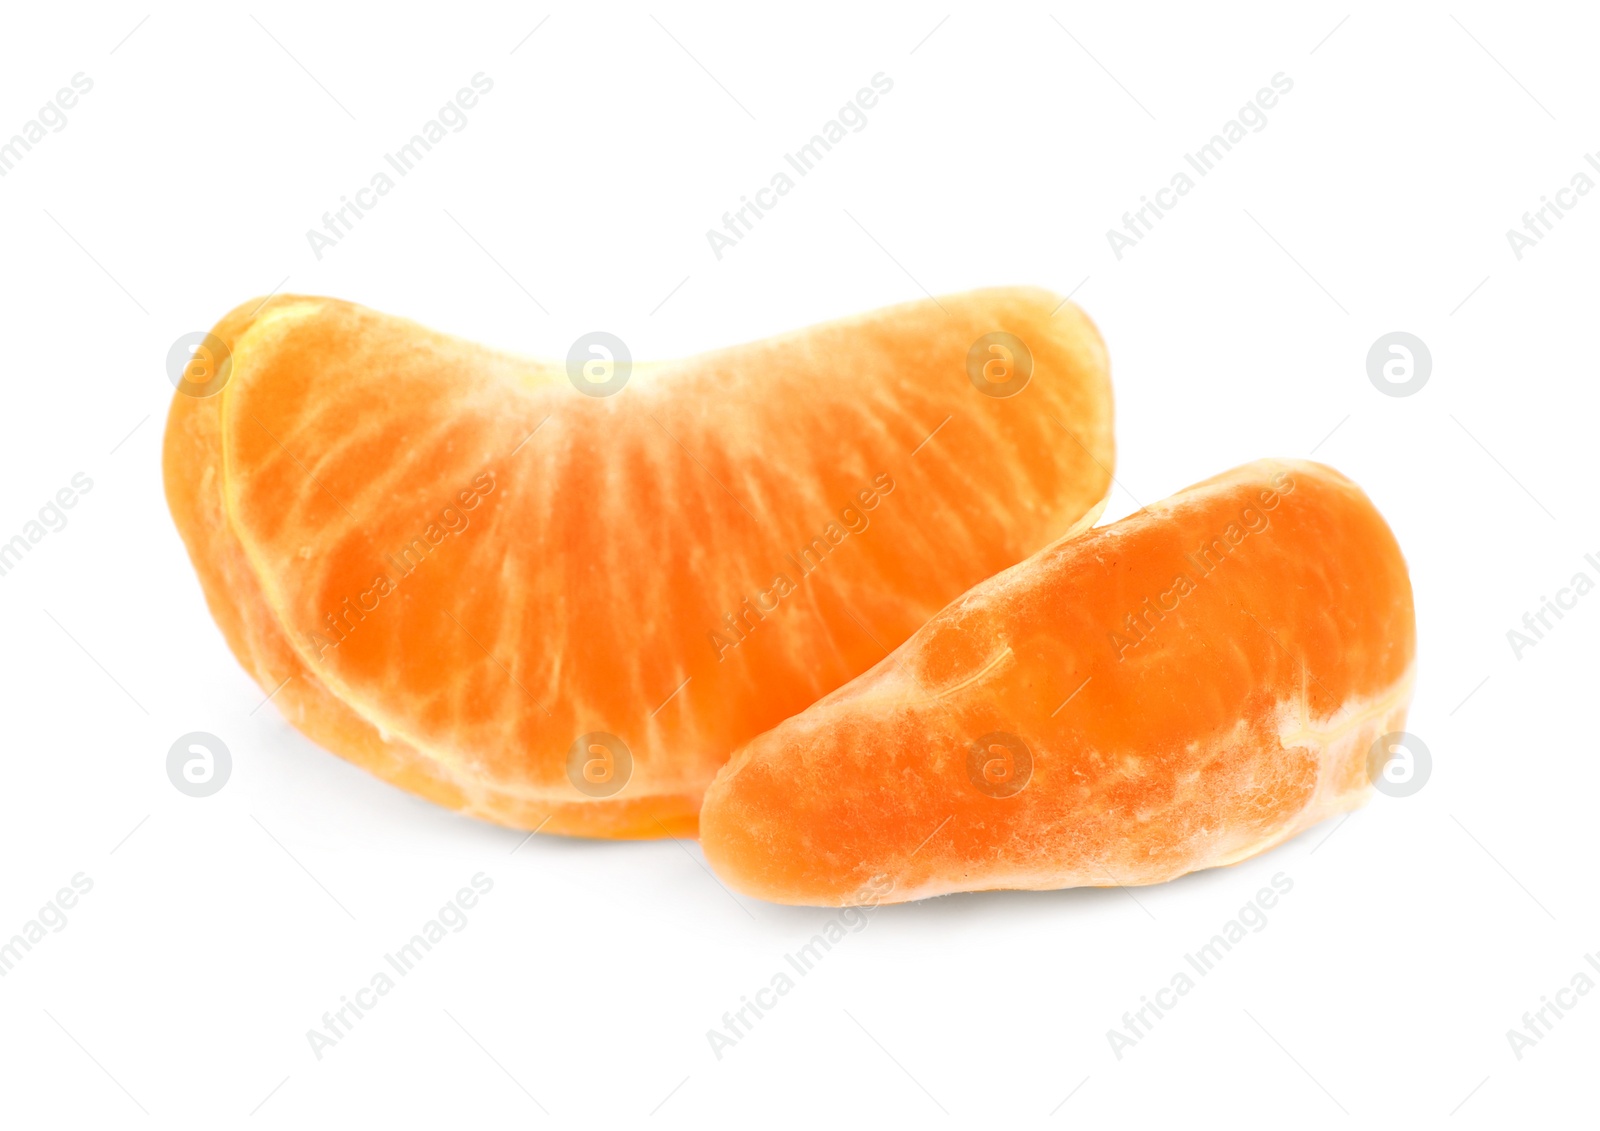 Photo of Fresh juicy tangerine segments isolated on white